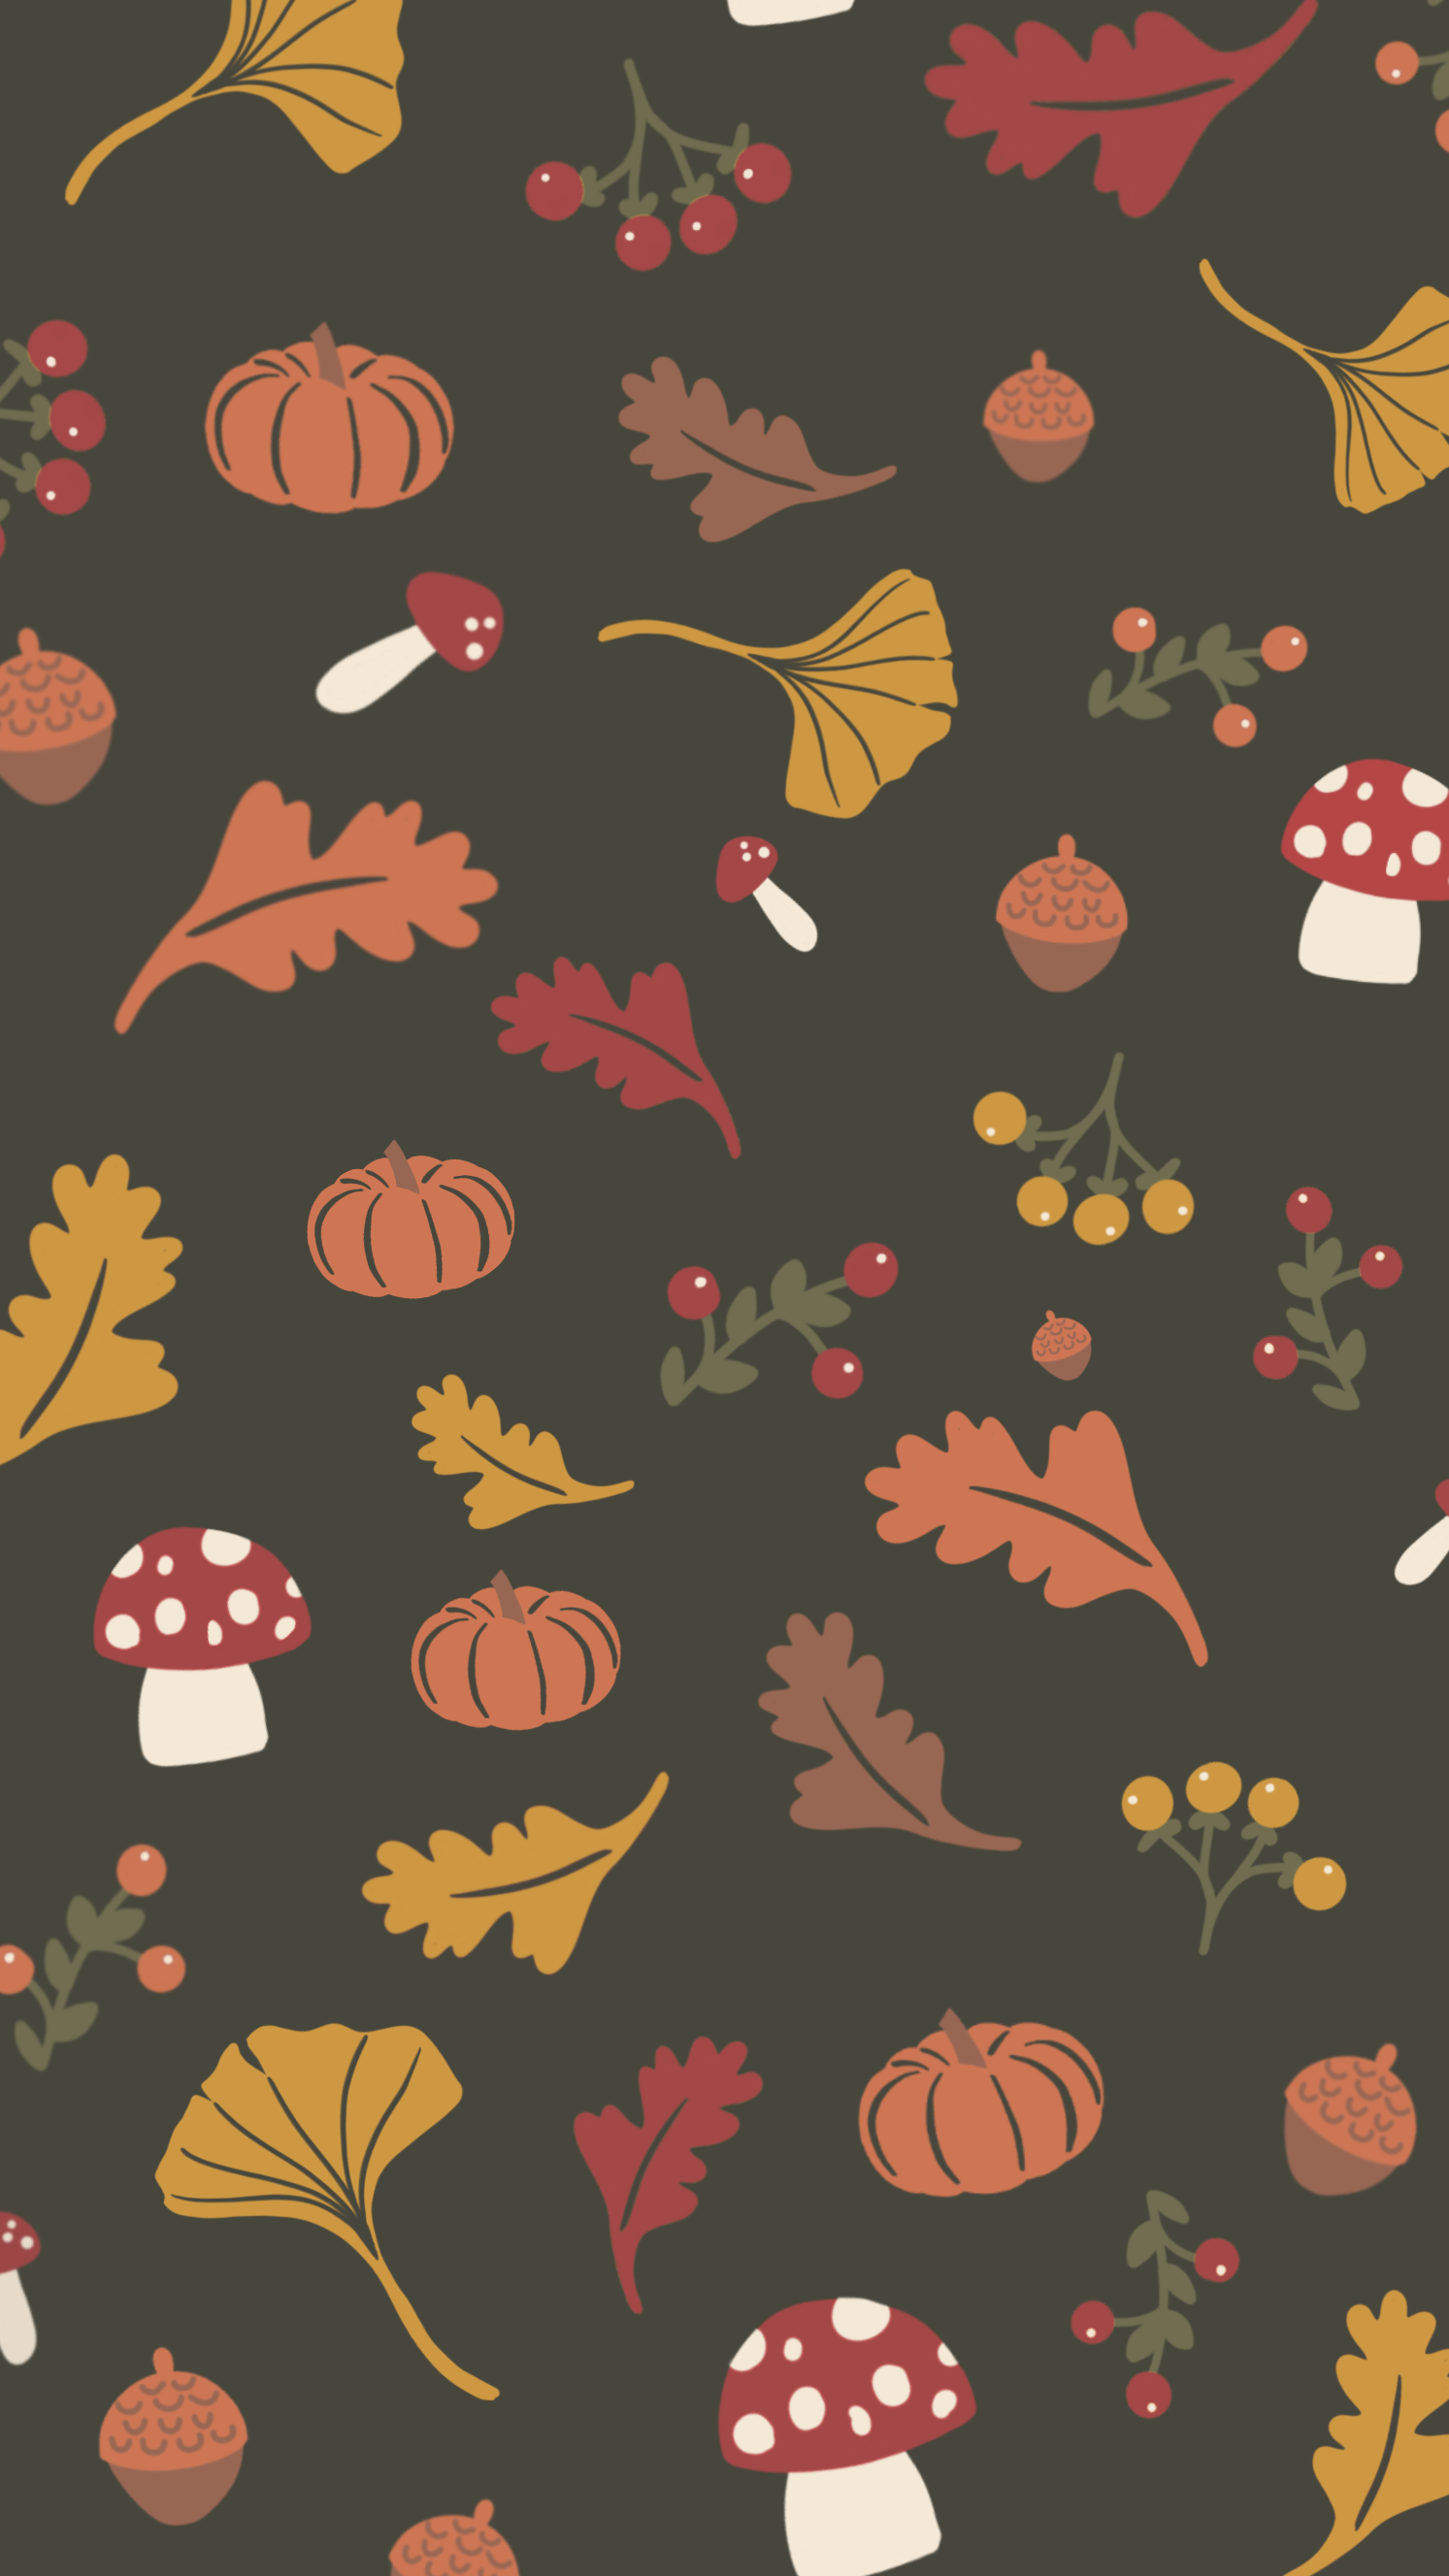 Free seasonal wallpapers for christmas and thanksgiving â alix carman